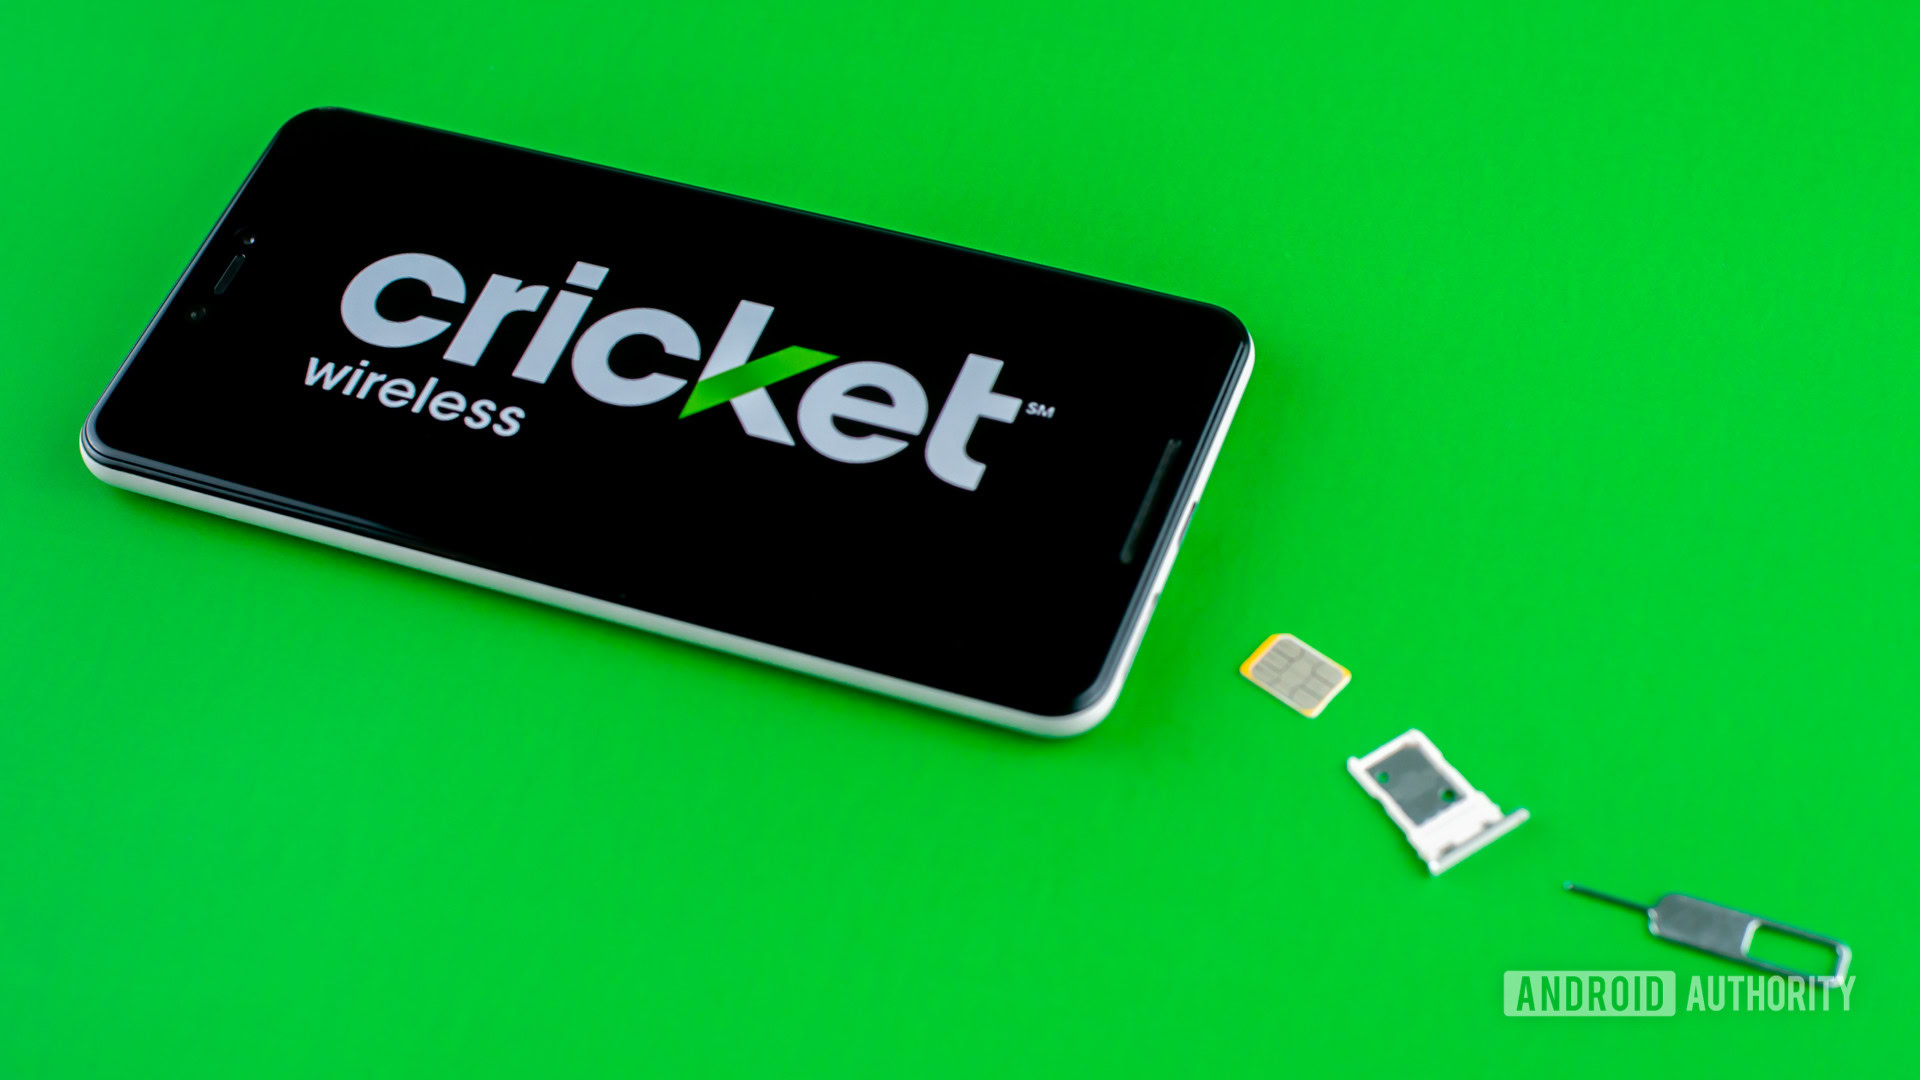 Cricket Wireless stock photo 2